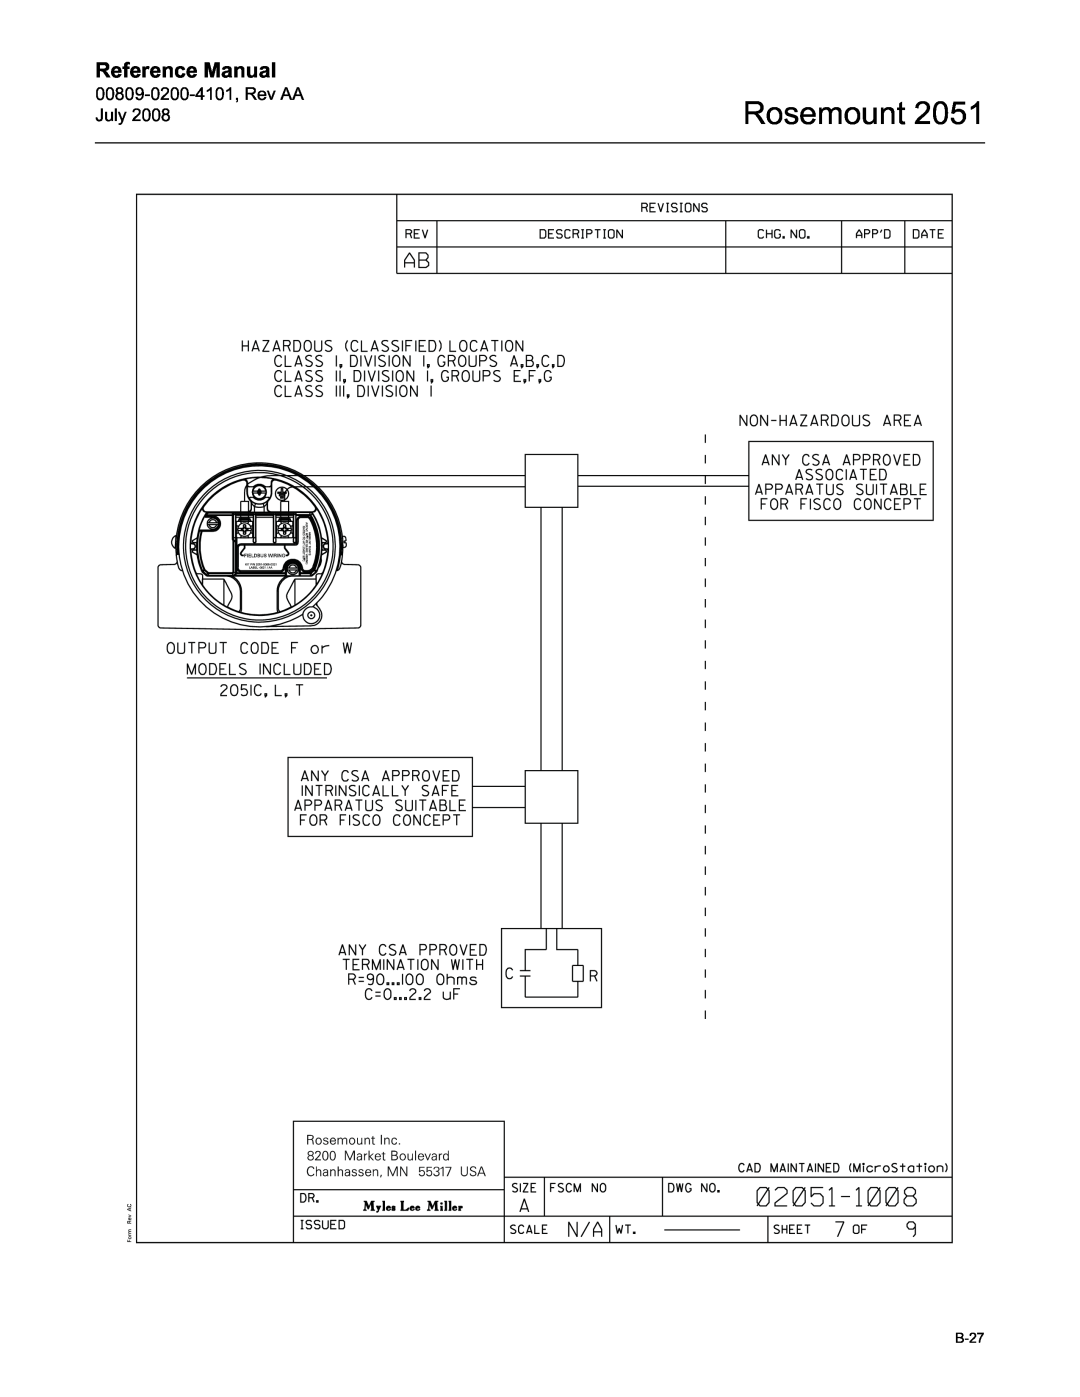 Emerson Process Management 2051 manual Rosemount, Reference Manual, B-27 